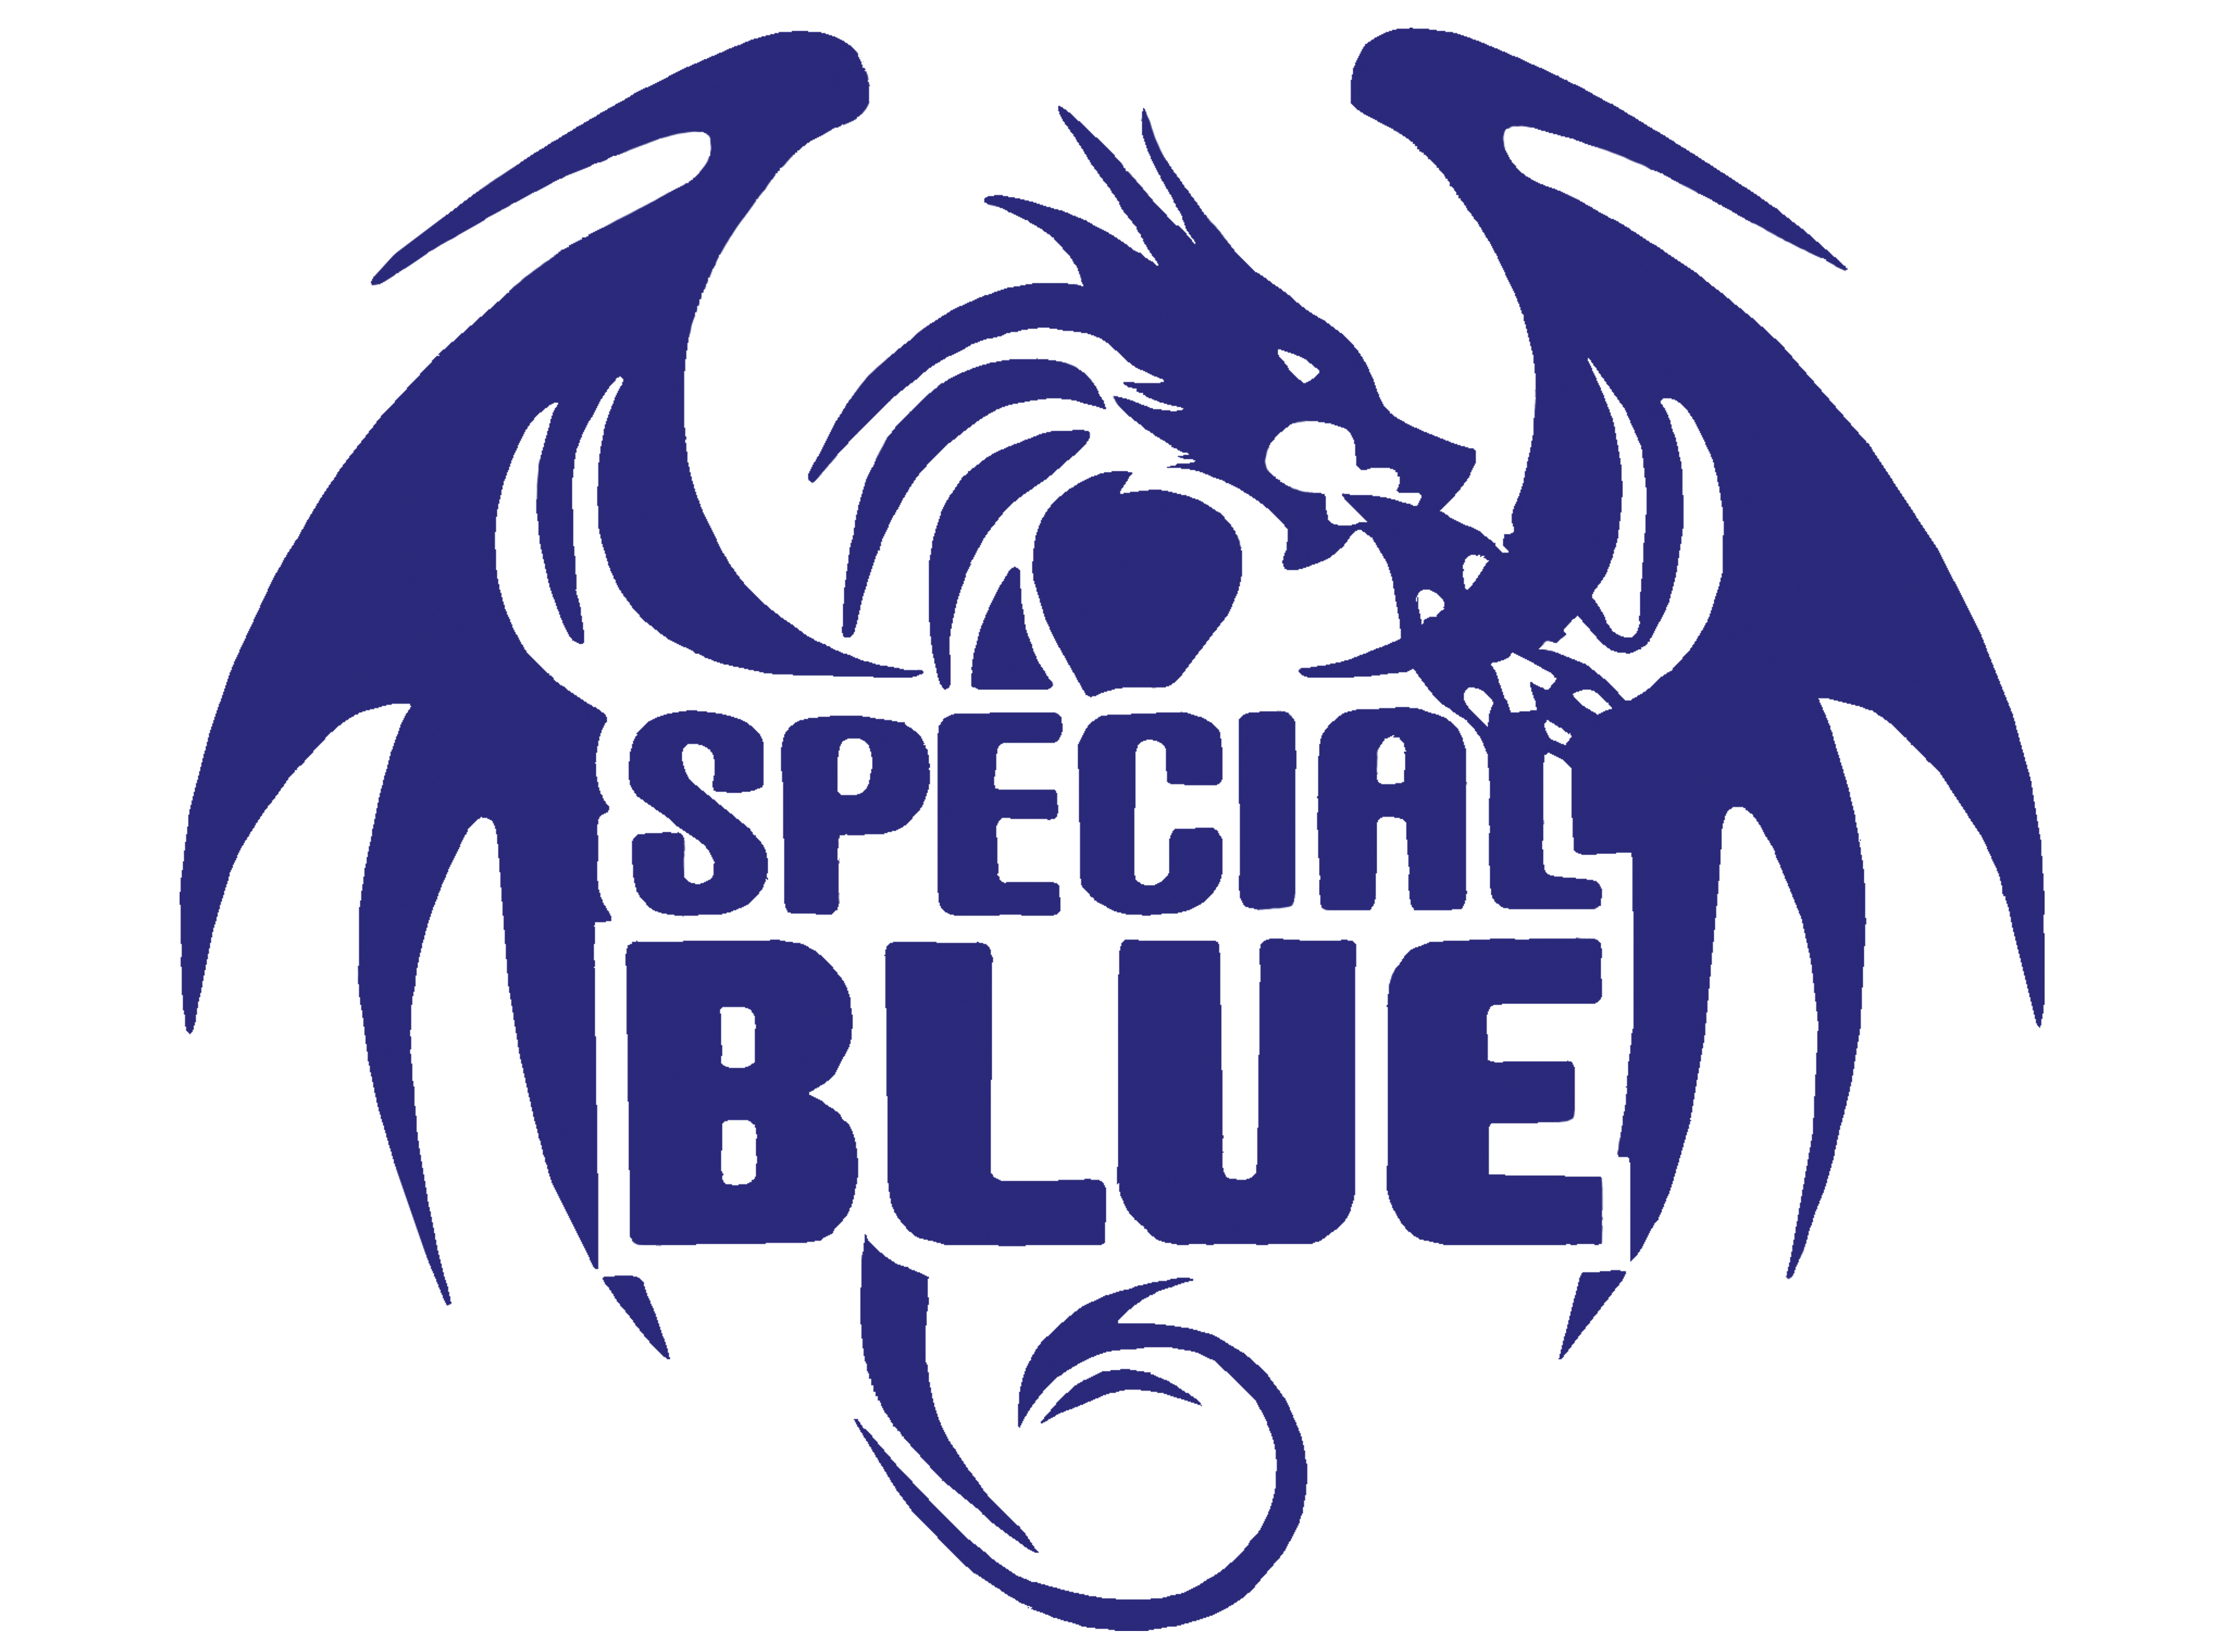 SPECIAL BLUE